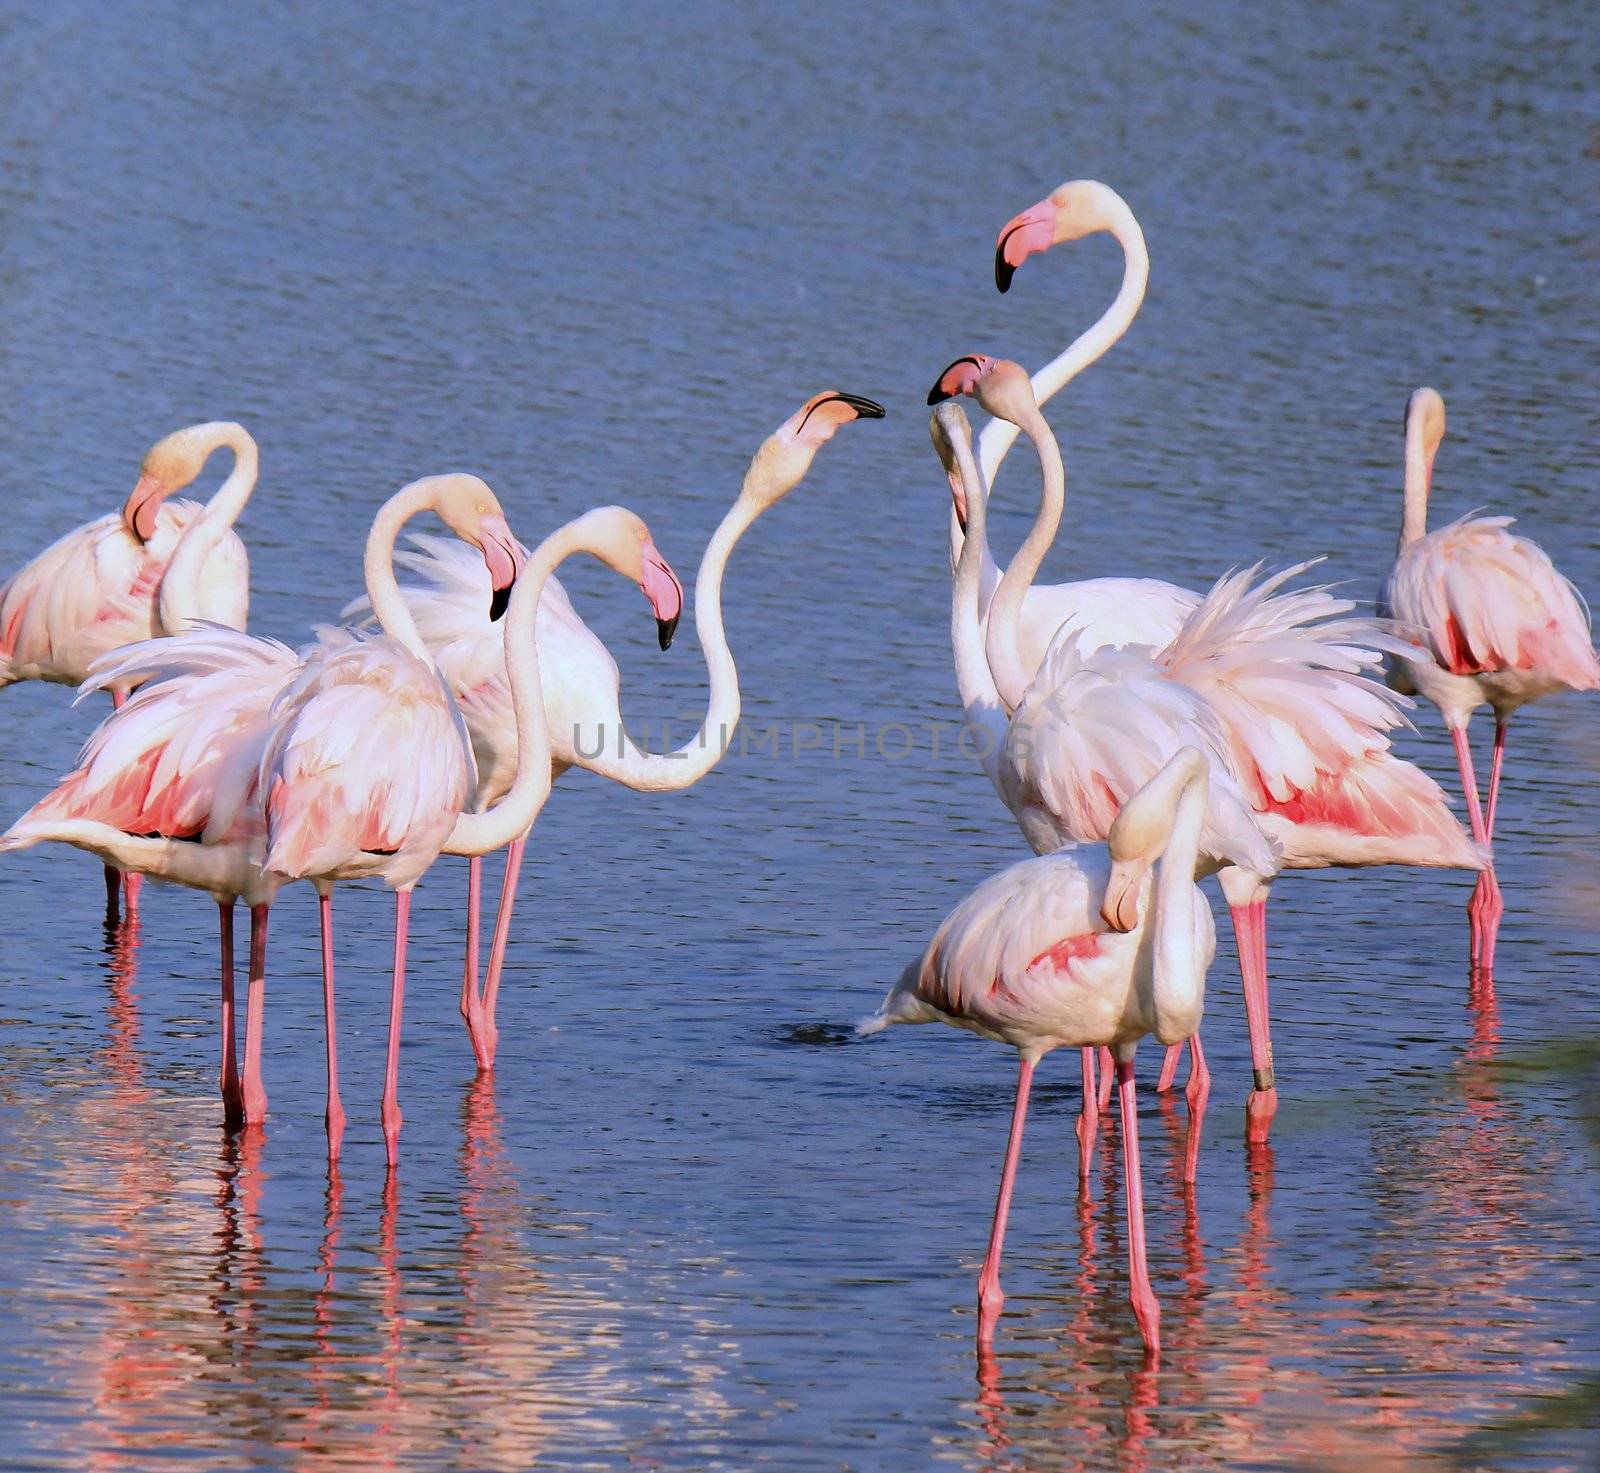 Group of flamingos by Elenaphotos21